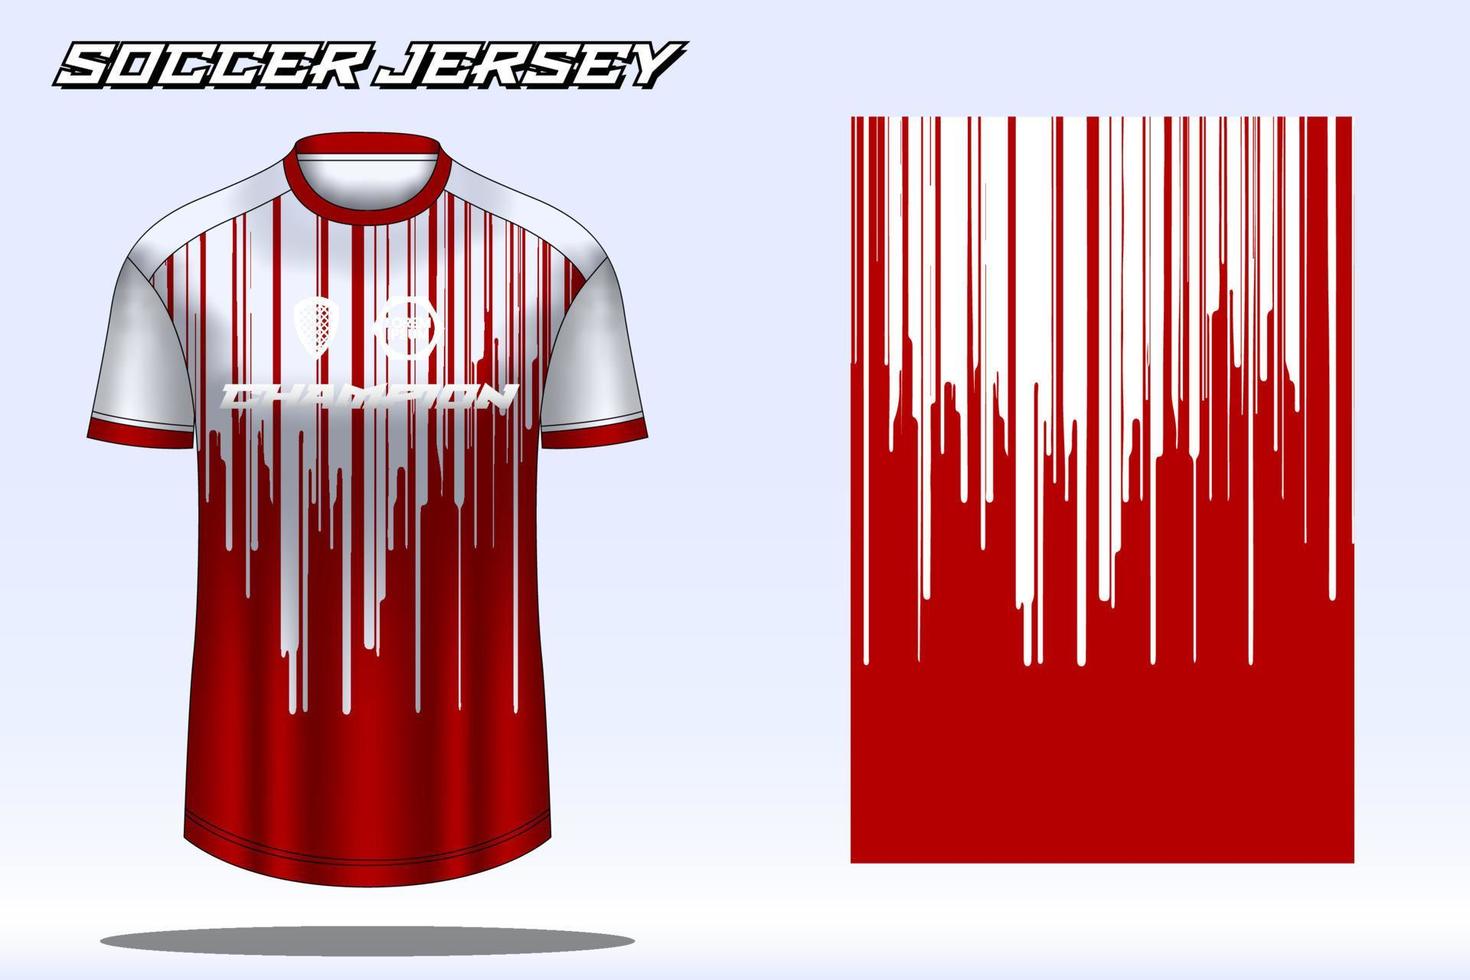 Soccer jersey sport t-shirt design mockup for football club 18 vector